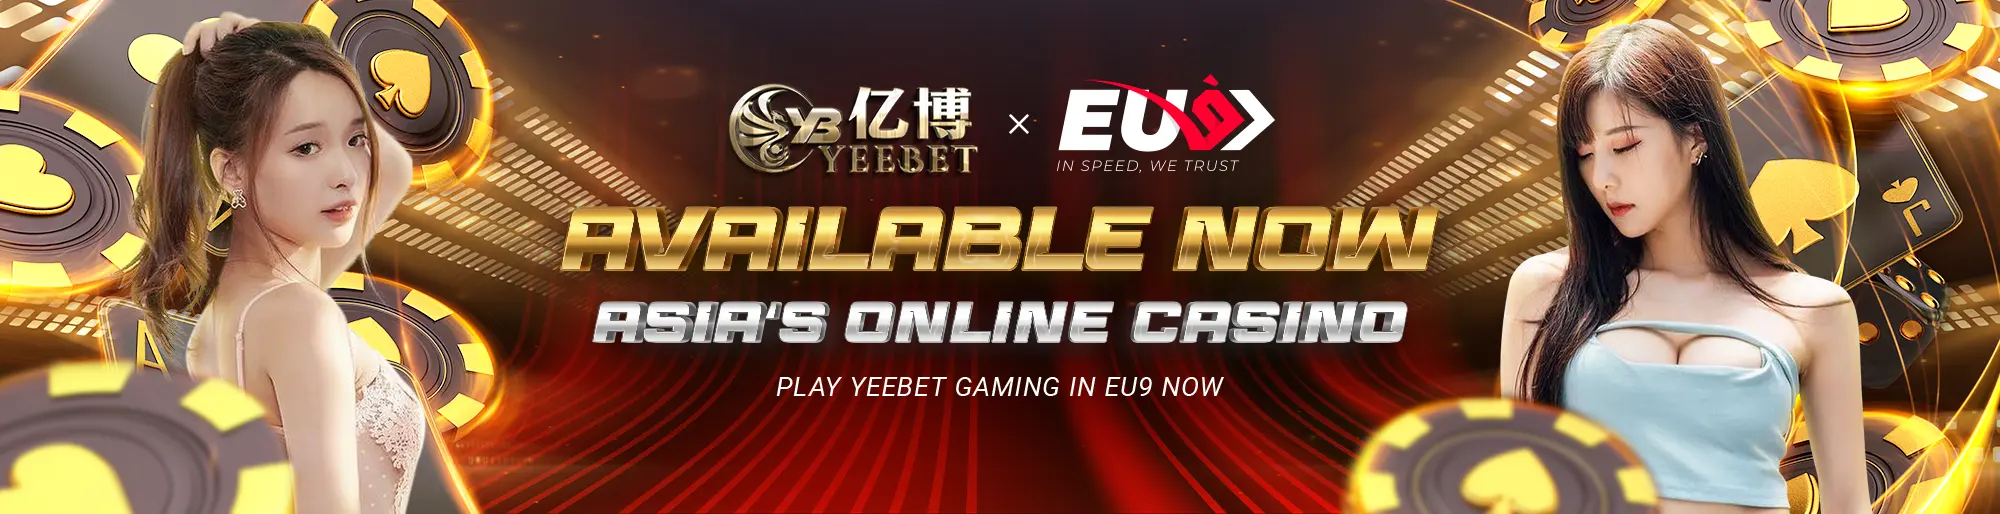 Asia Online Casino Banner